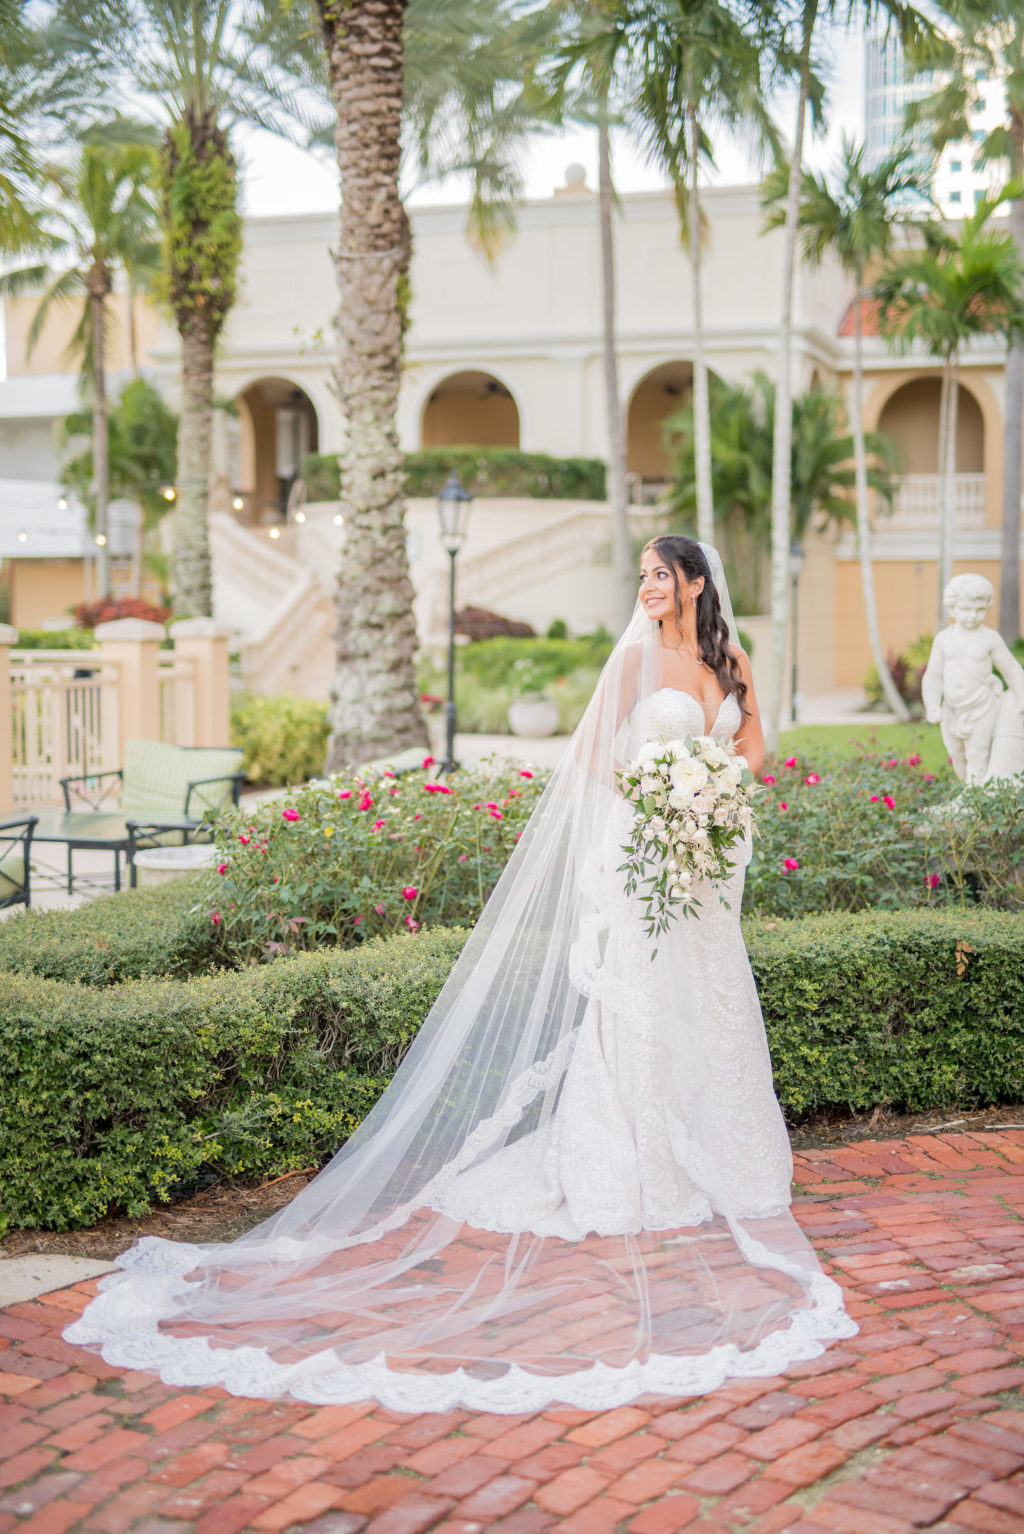 Elegant Classic Bride in Mermaid Strapless Wedding Dress and Full Length Lace Veil | Tampa Bay Wedding Photographer Kera Photography | Ritz Carlton Sarasota Wedding